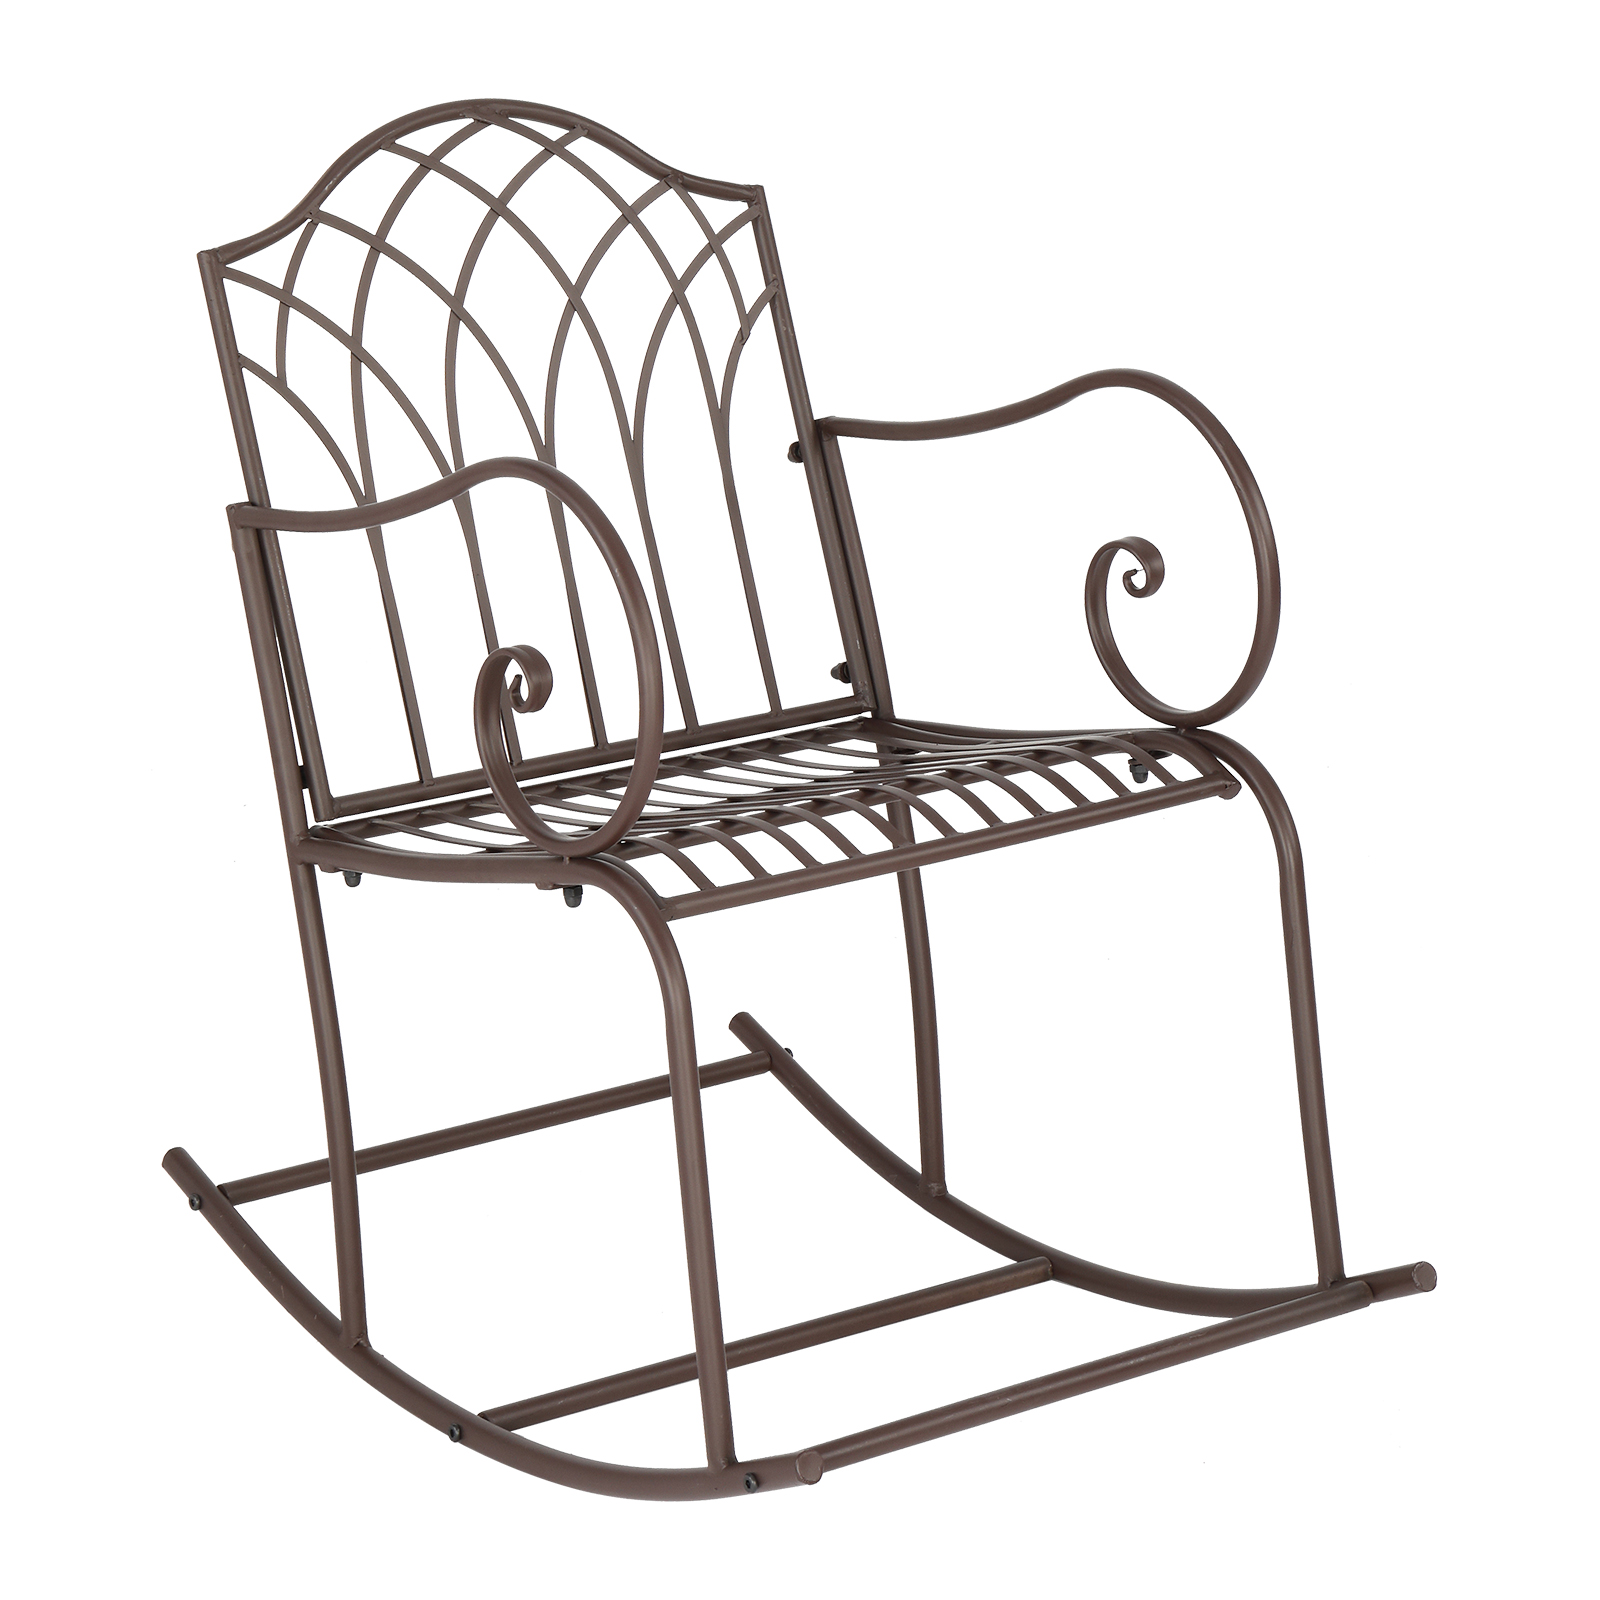 Outdoor Rocking Chair, BTMWAY Retro Metal Outdoor Chairs, Outdoor Patio Rocking Chairs, Iron Metal Rocking Chairs for Porch, Rocker Lawn Chair for Patio, Backyard, Park, Garden, Deck, Brown, R2579 - image 2 of 8